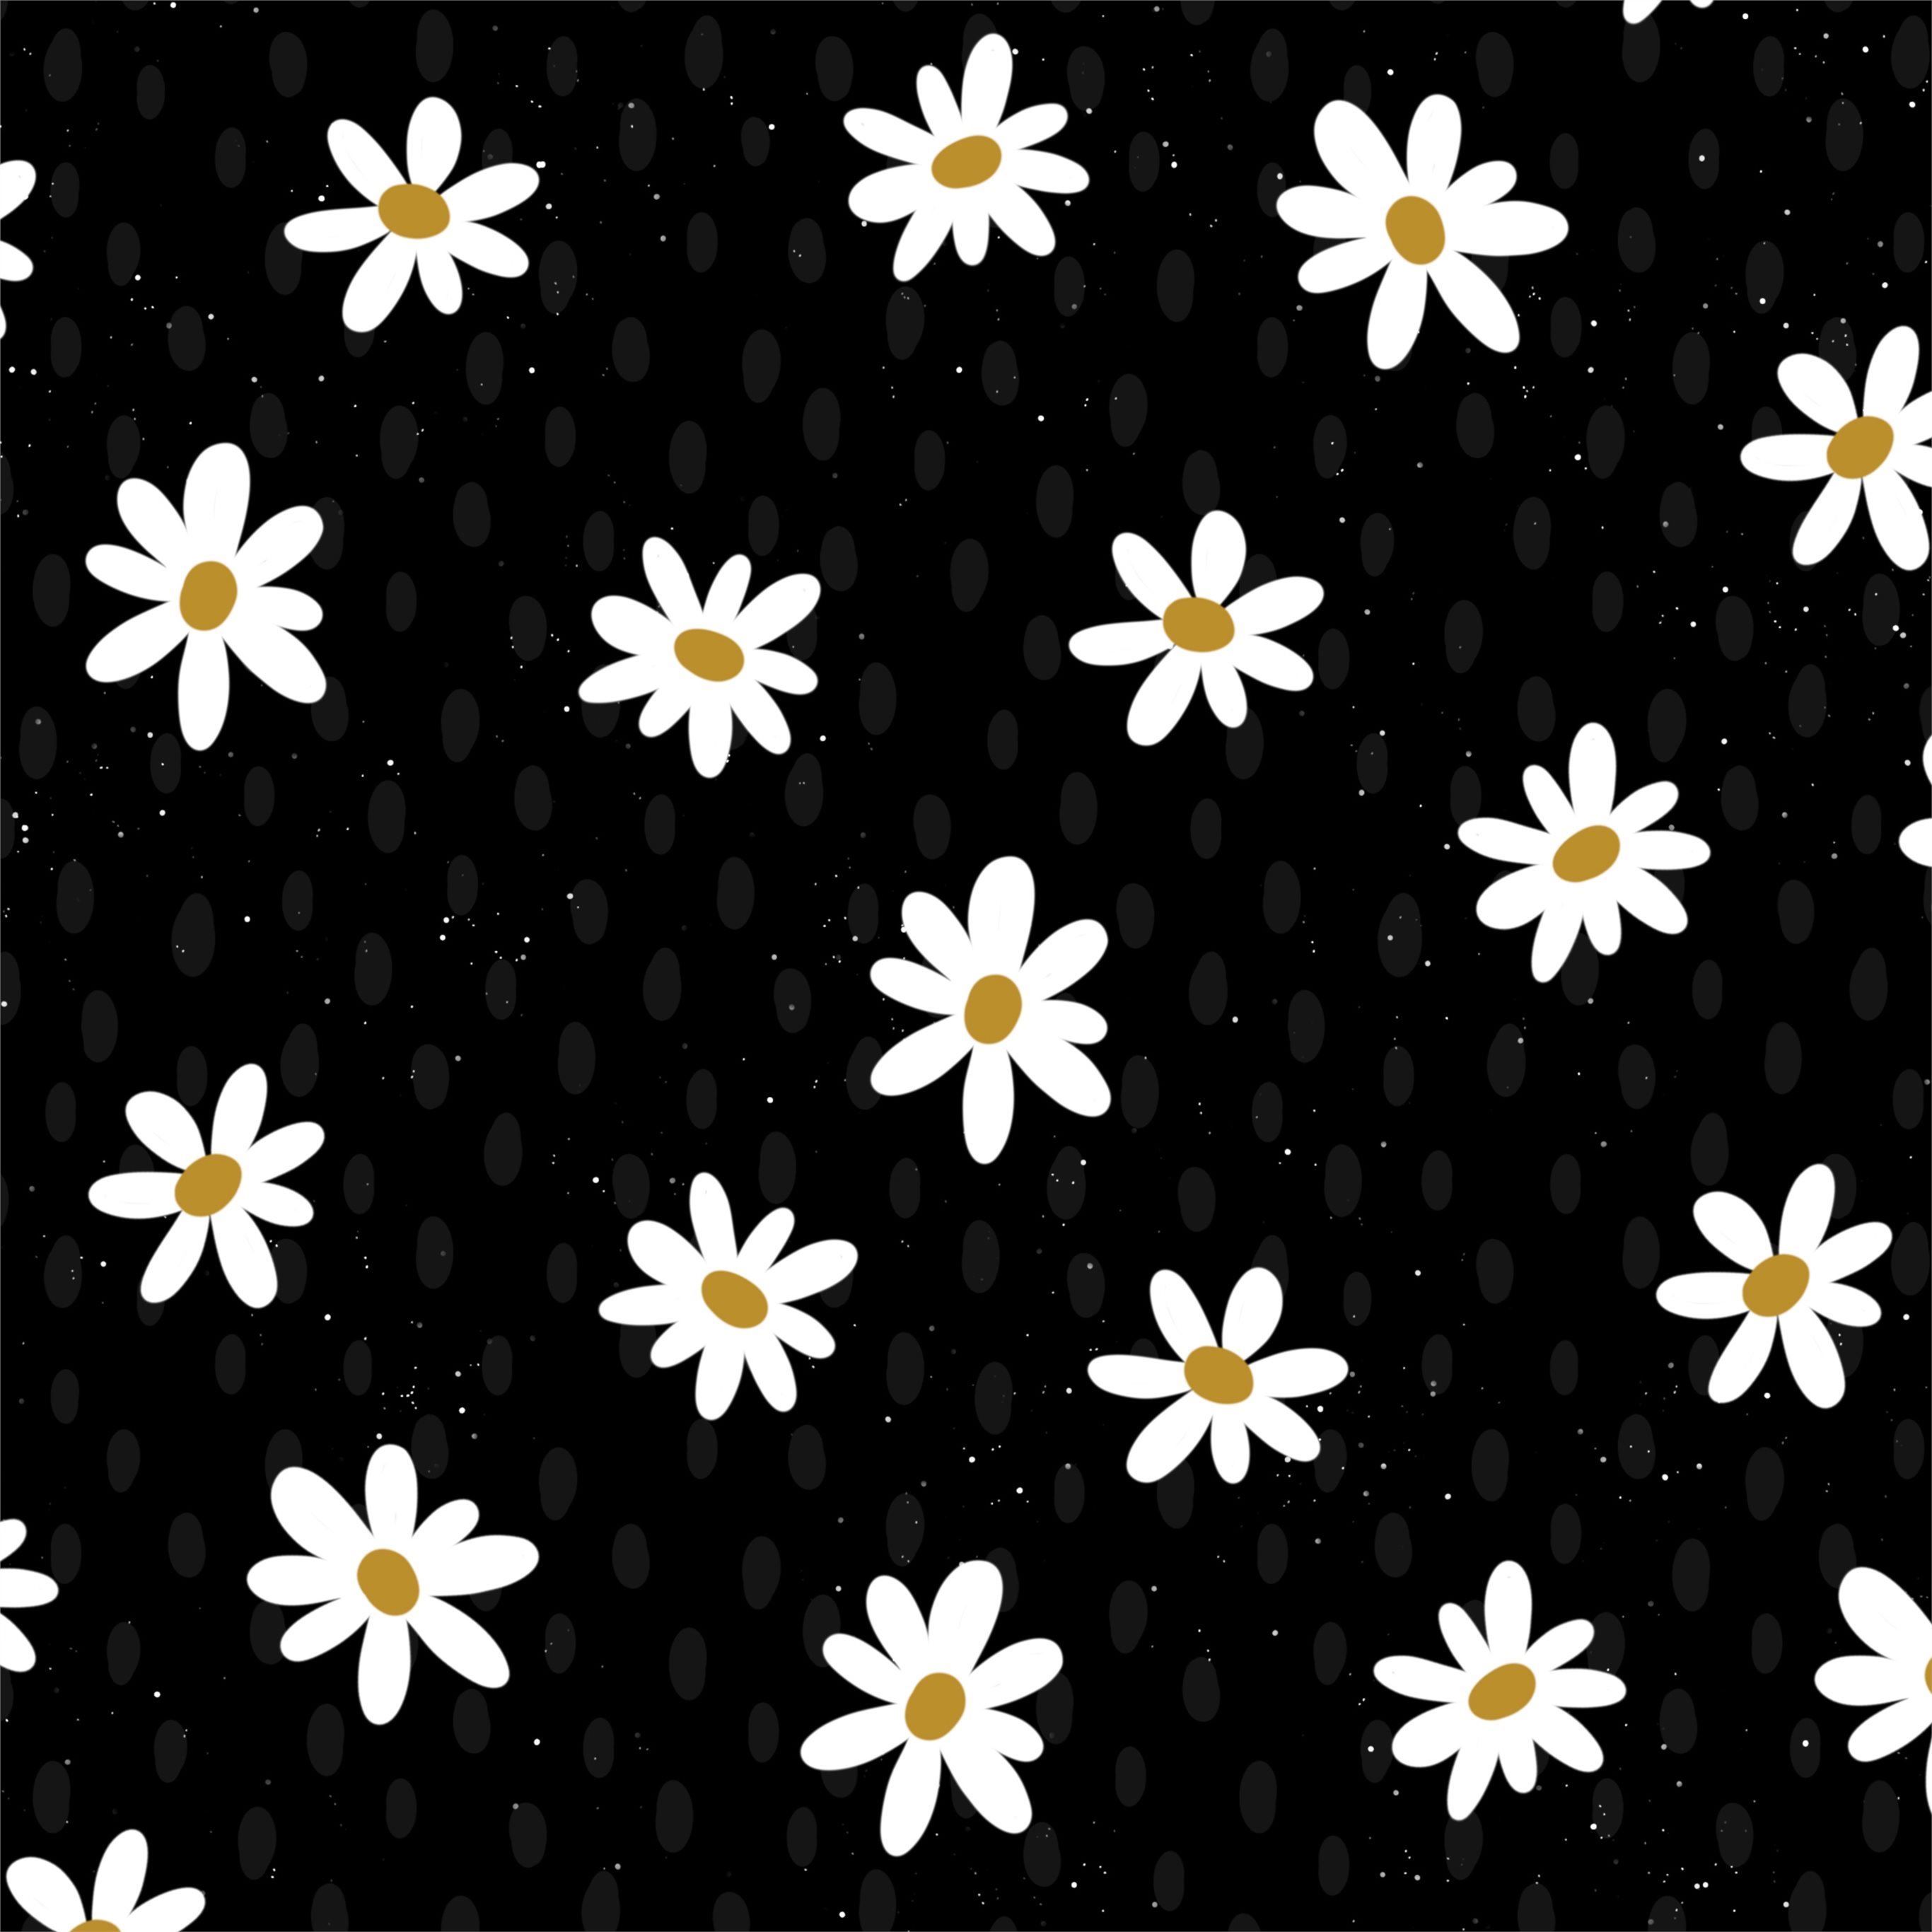 daisy flower pattern abstract 4k iPad Pro Wallpaper Free Download